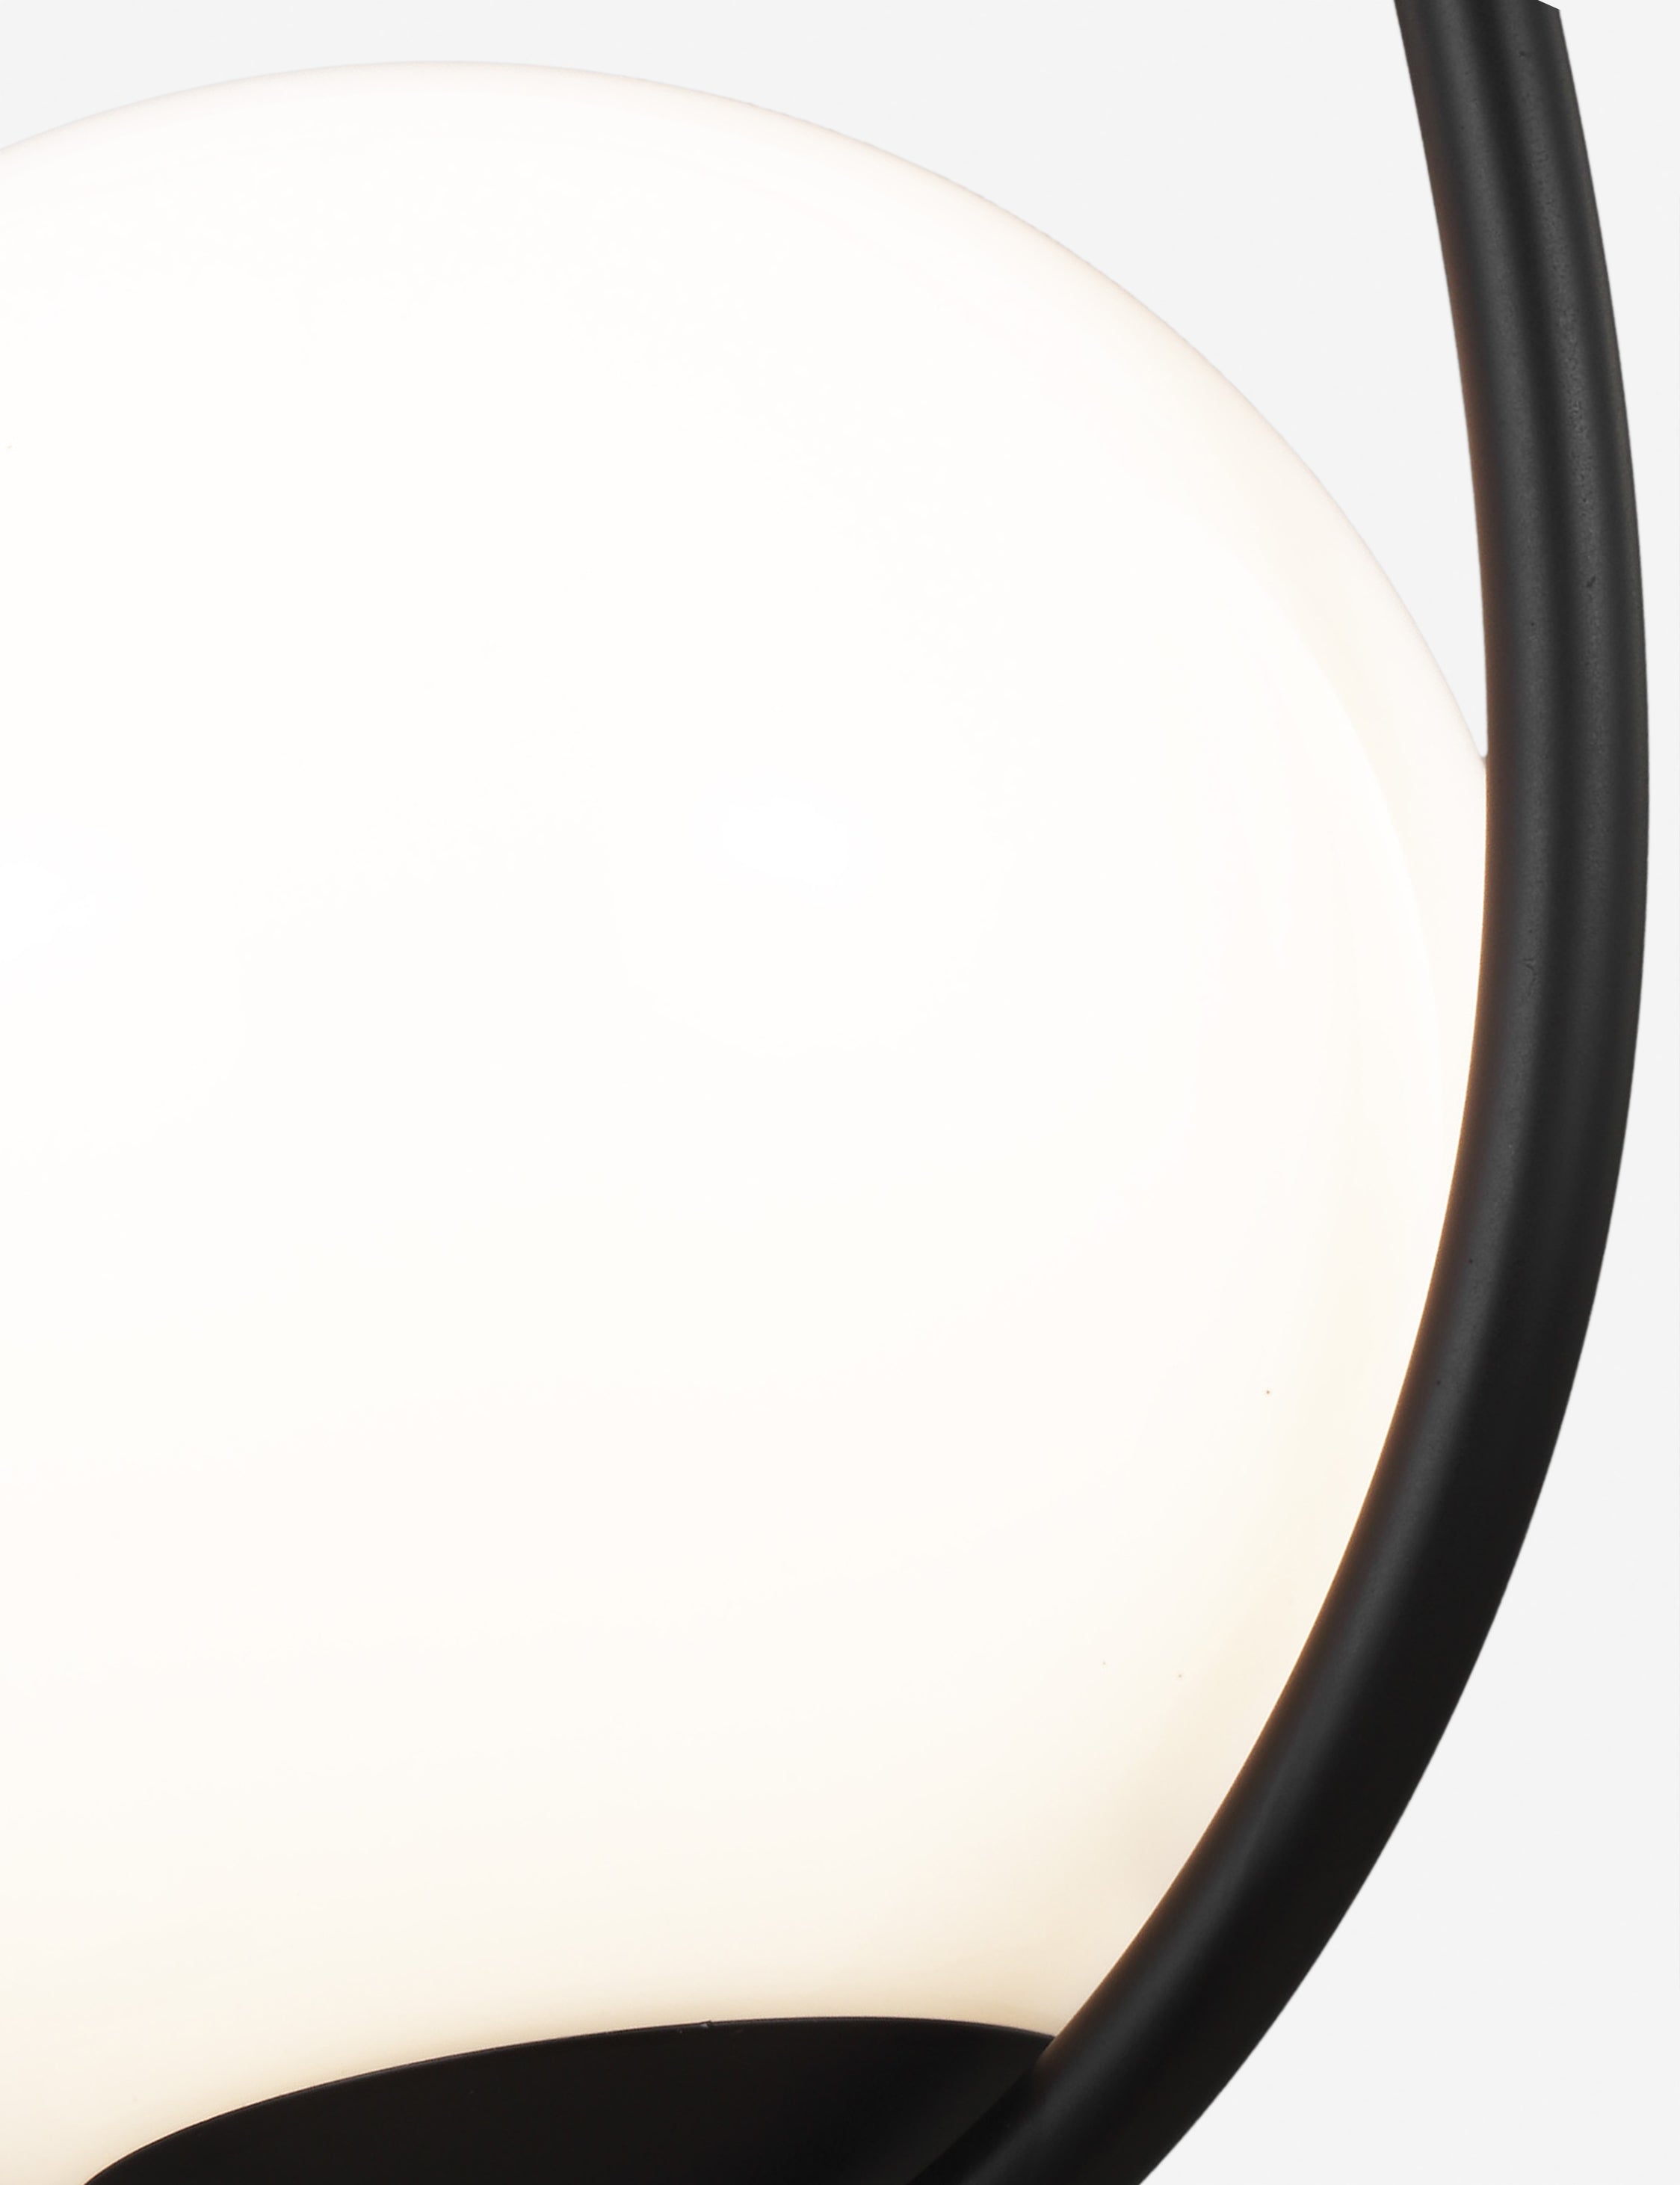 Galassia Pendant Light by AERIN - Image 6